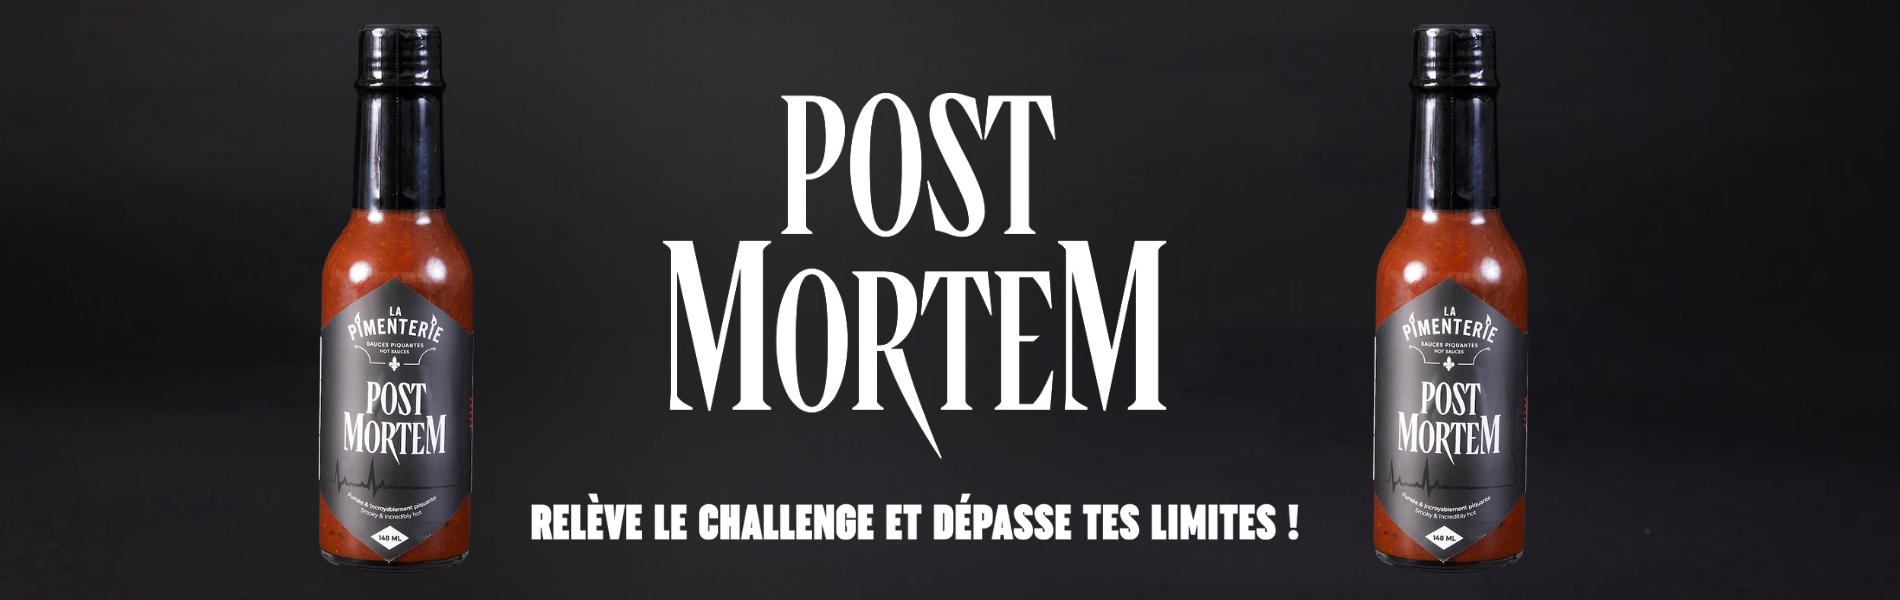 Post Mortem